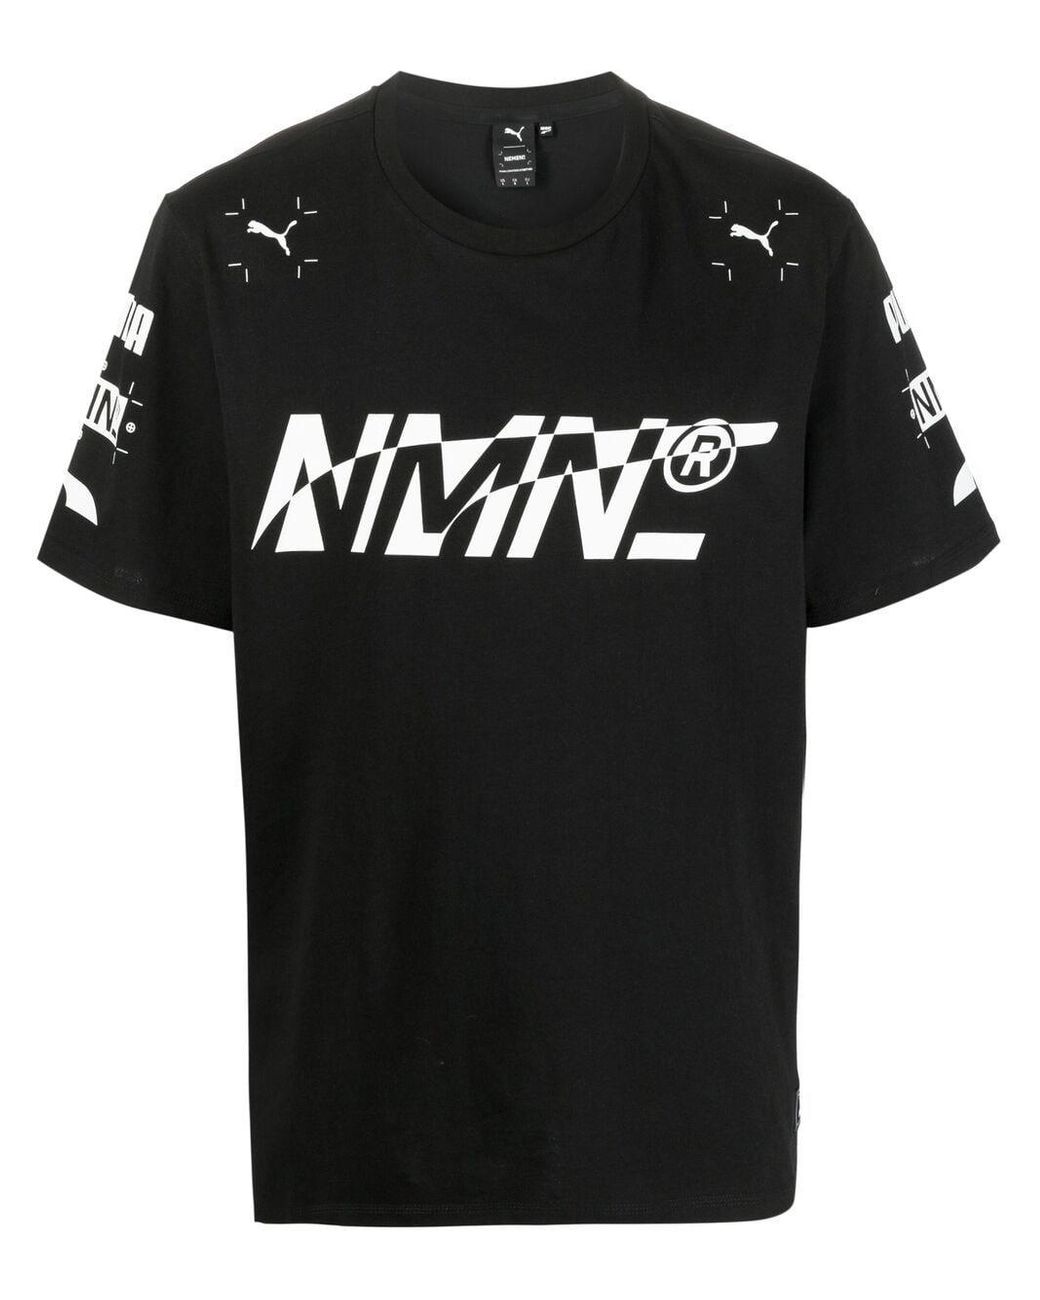 PUMA X Nemen Cotton T-shirt in Black for Men - Save 69% - Lyst